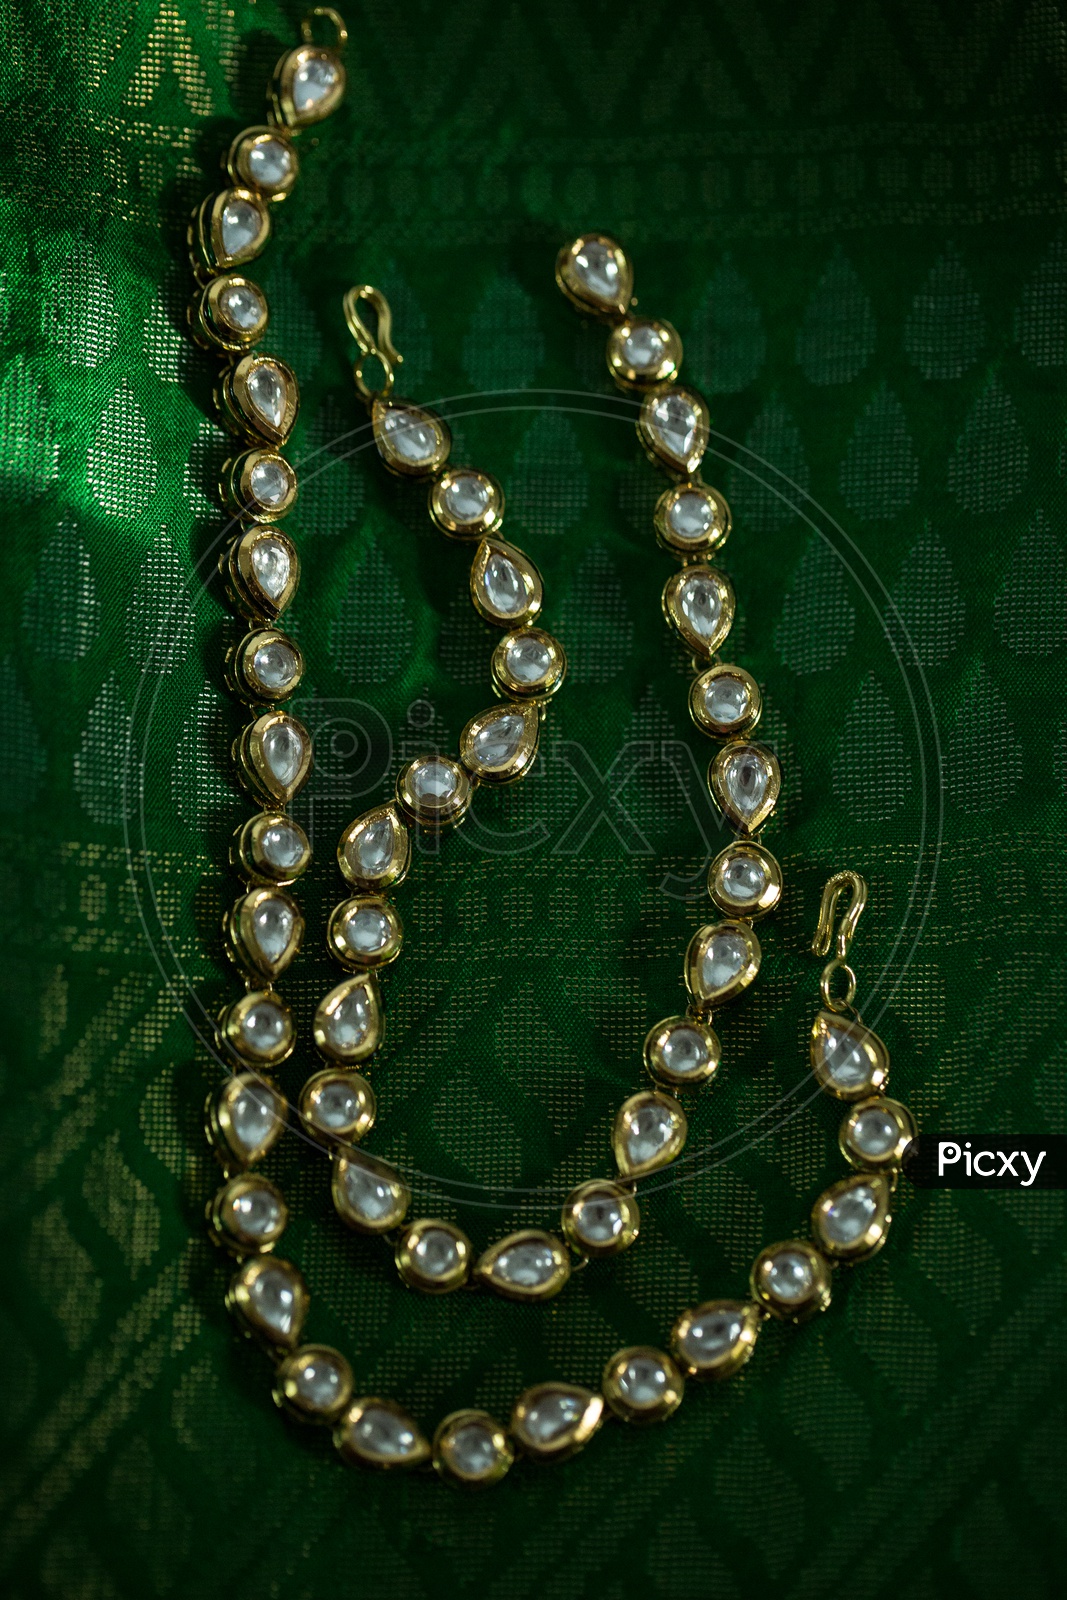 Indian Made Pearl Chains Closeup Shots